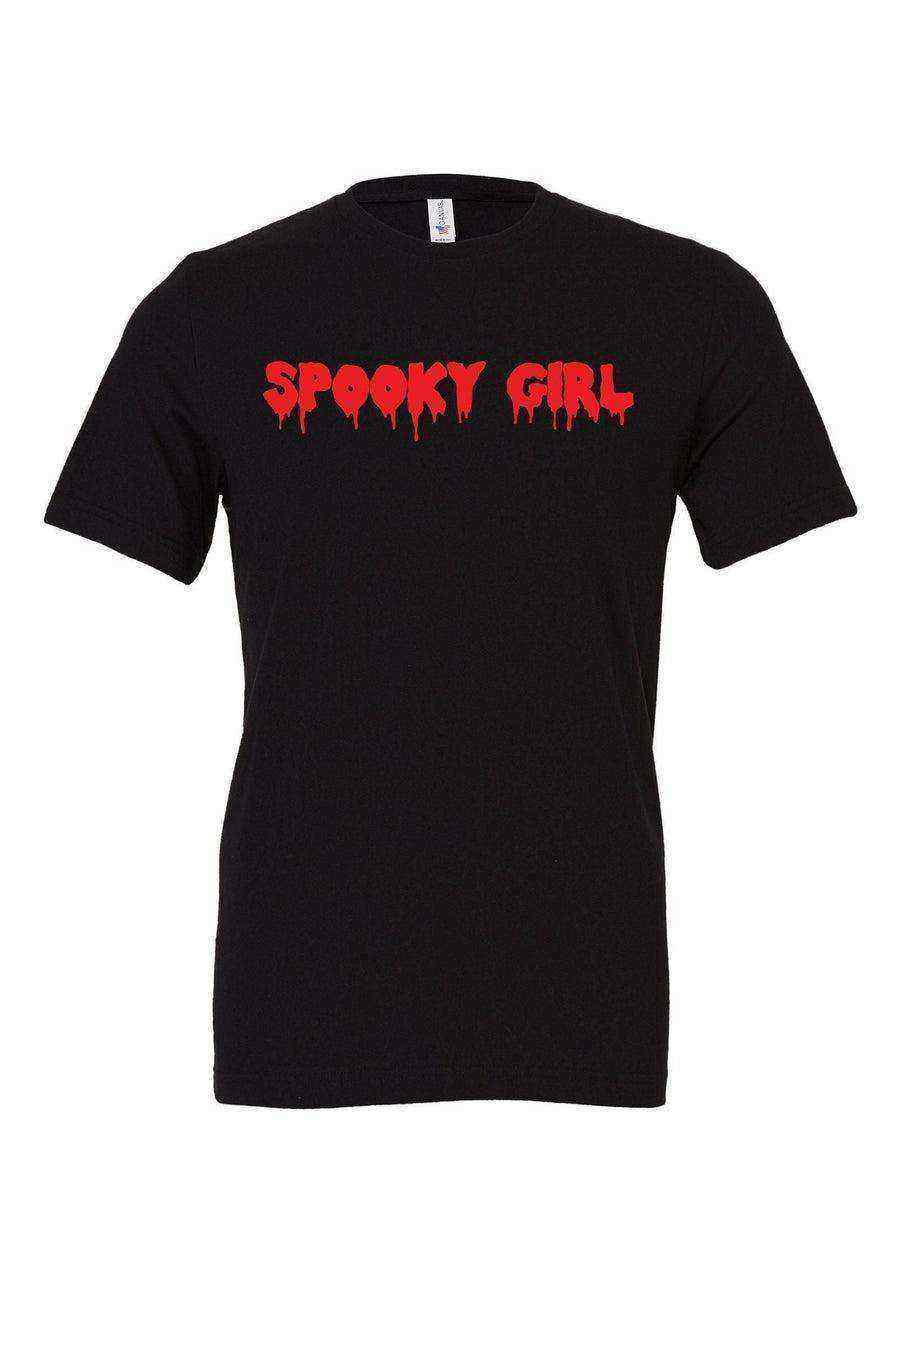 Womens | Spooky Girl Shirt | Halloween Shirt - Dylan's Tees